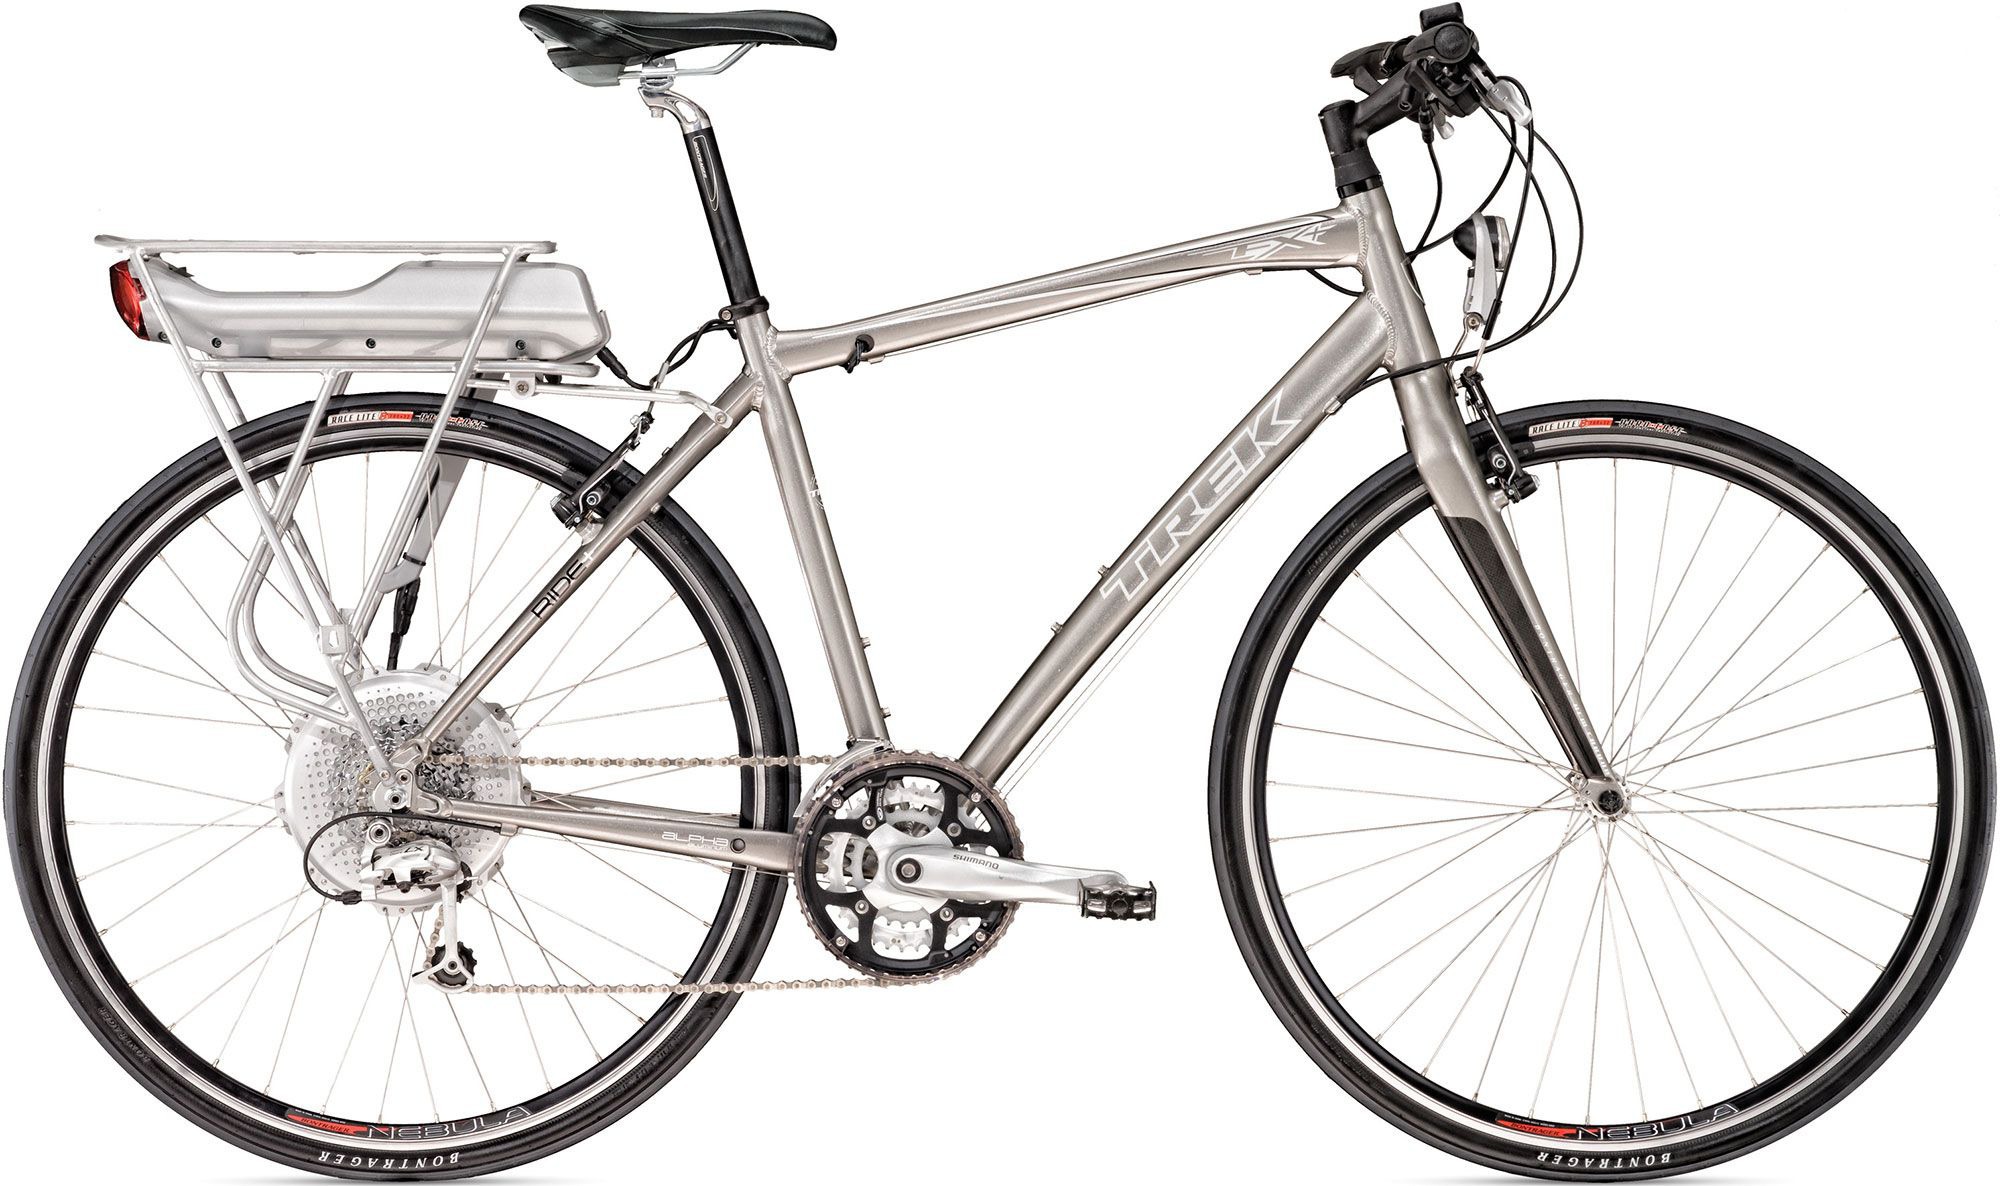 2010 Trek FX+ - Bicycle Details 